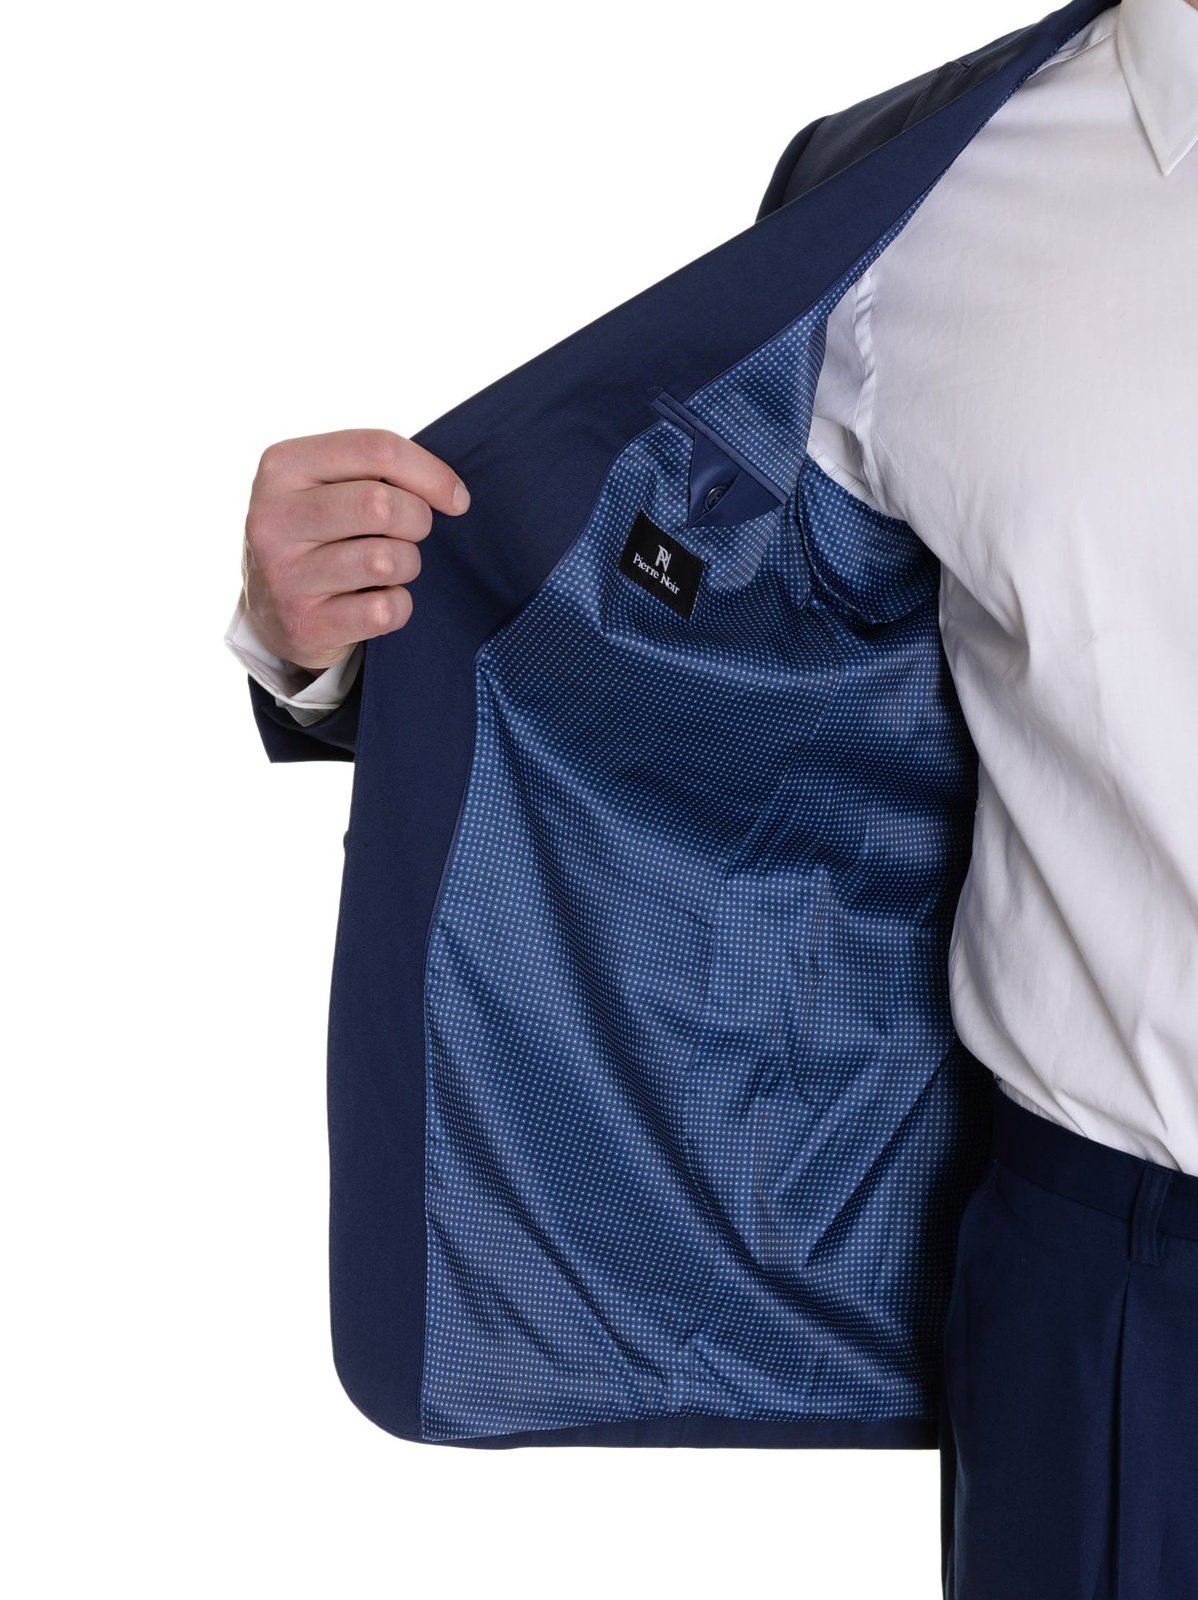 Raphael TWO PIECE SUITS Raphael Solid Blue Suit With Peak Lapels And Ticket Pocket